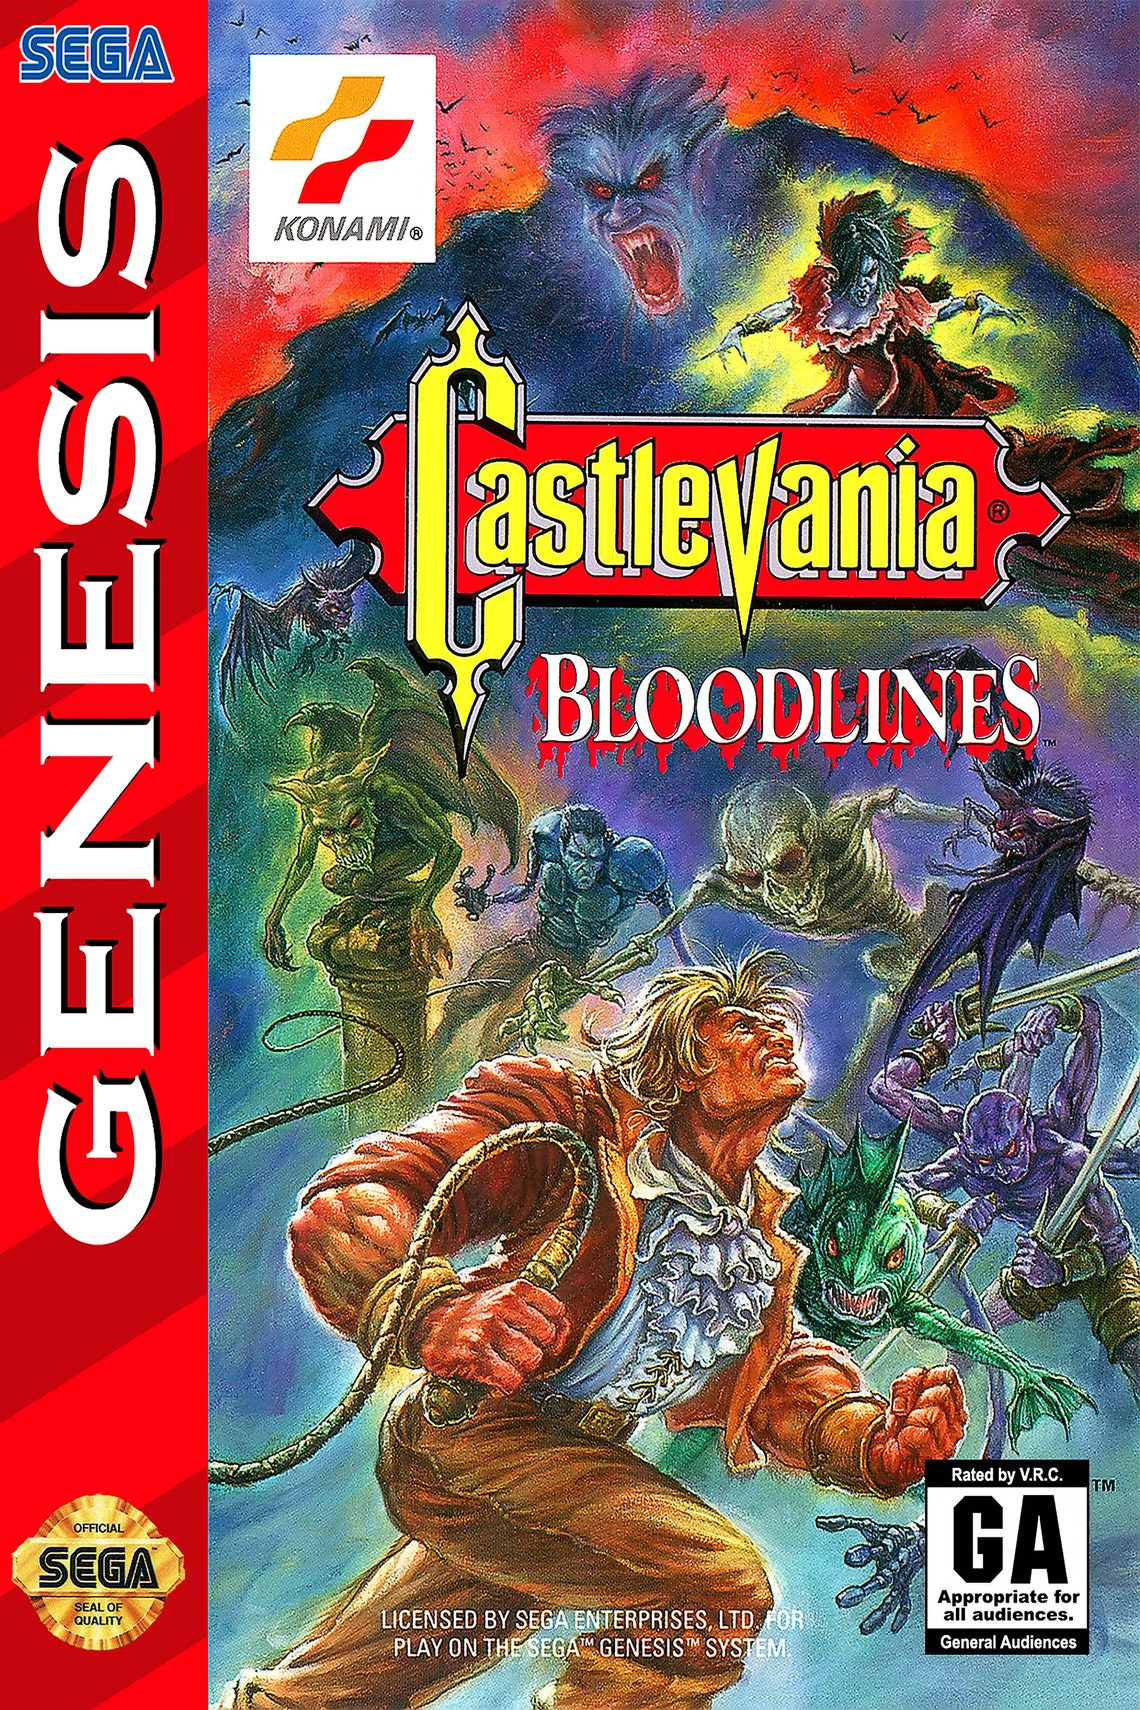 Castlevania Bloodlines Sega Genesis Game Box Cover Art Poster Etsy